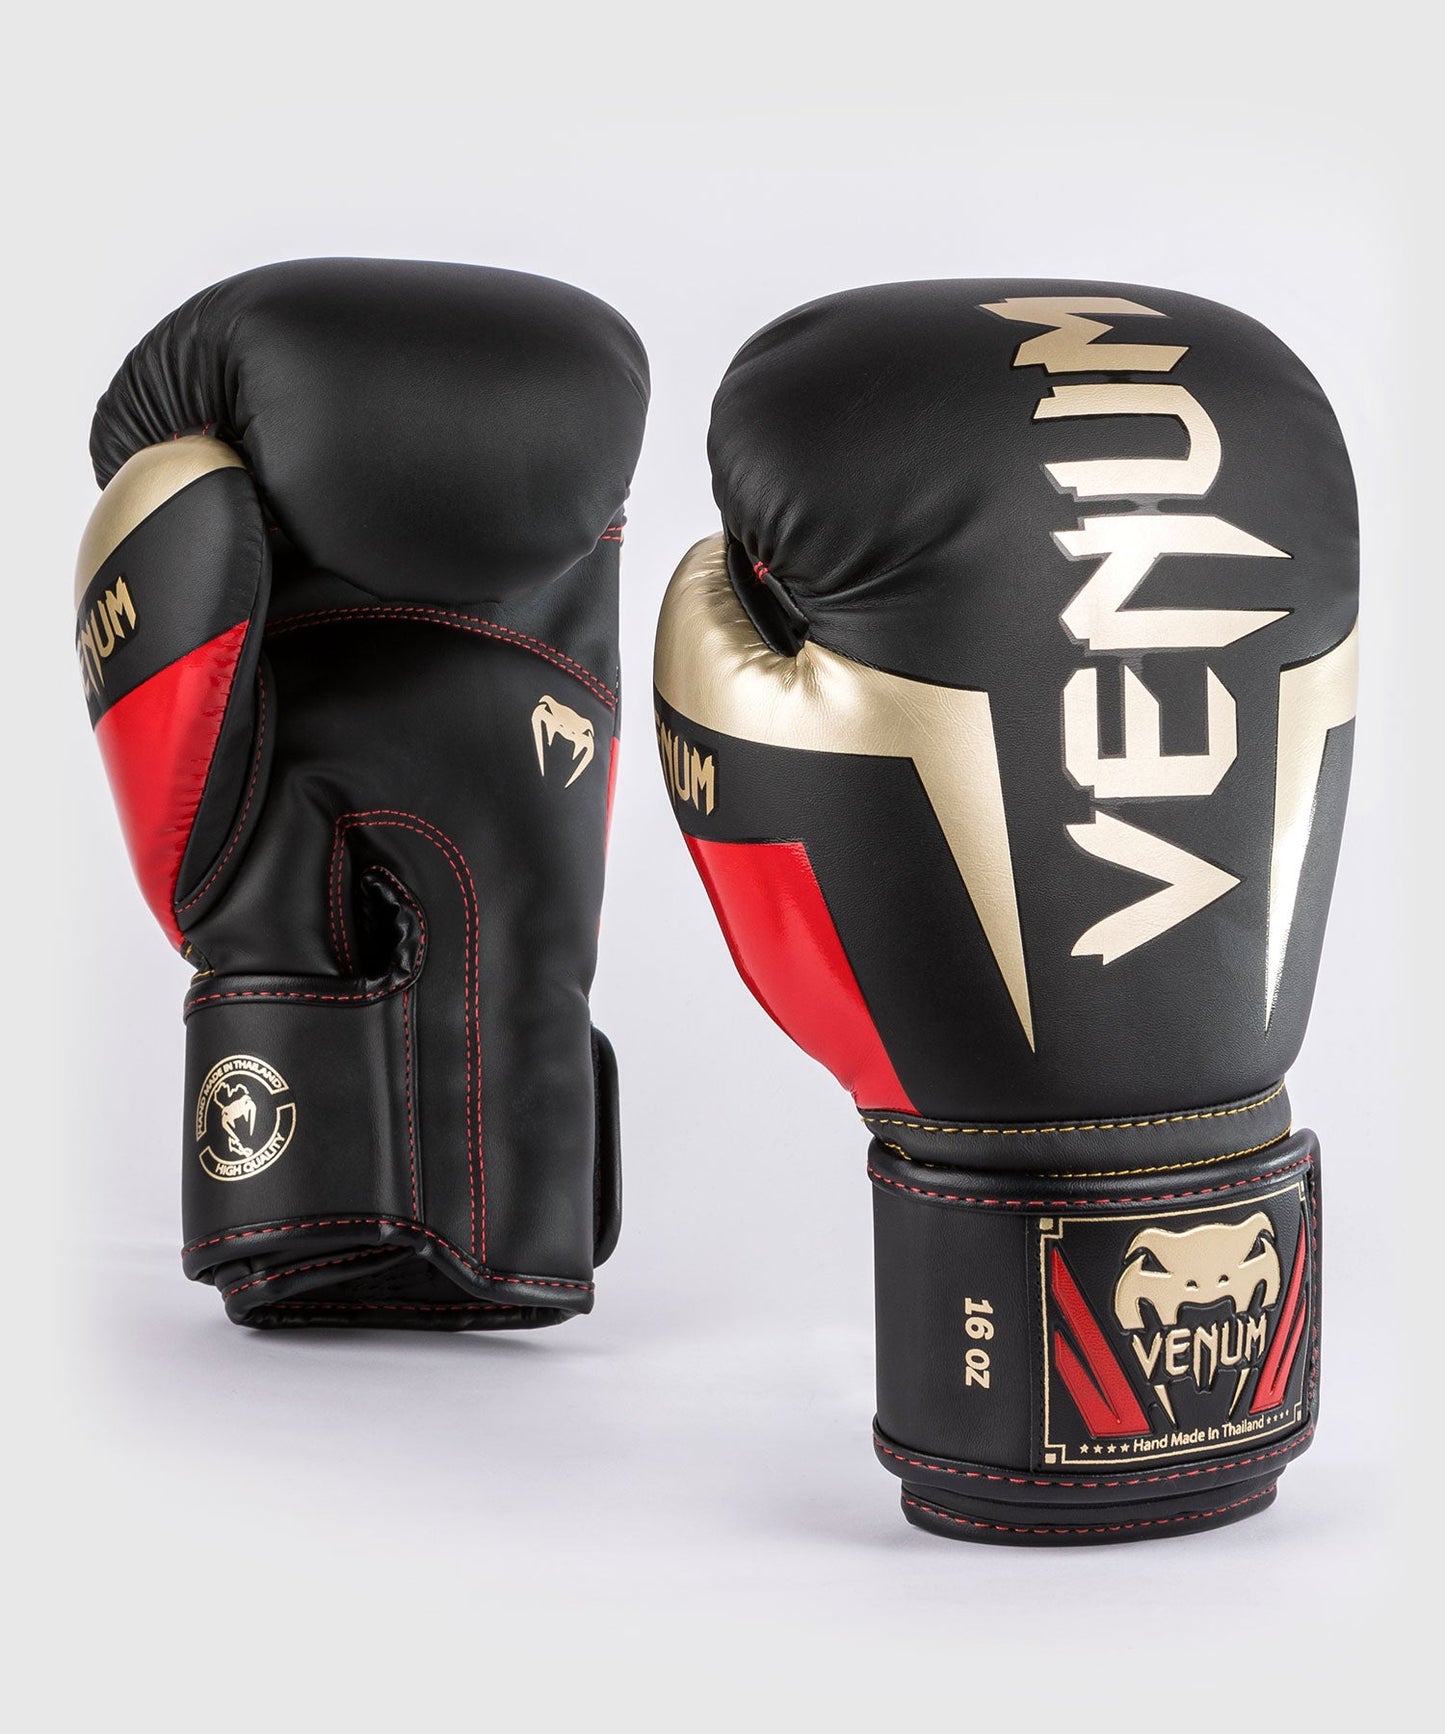 Venum Elite Boxing Gloves - Black/Gold/Red